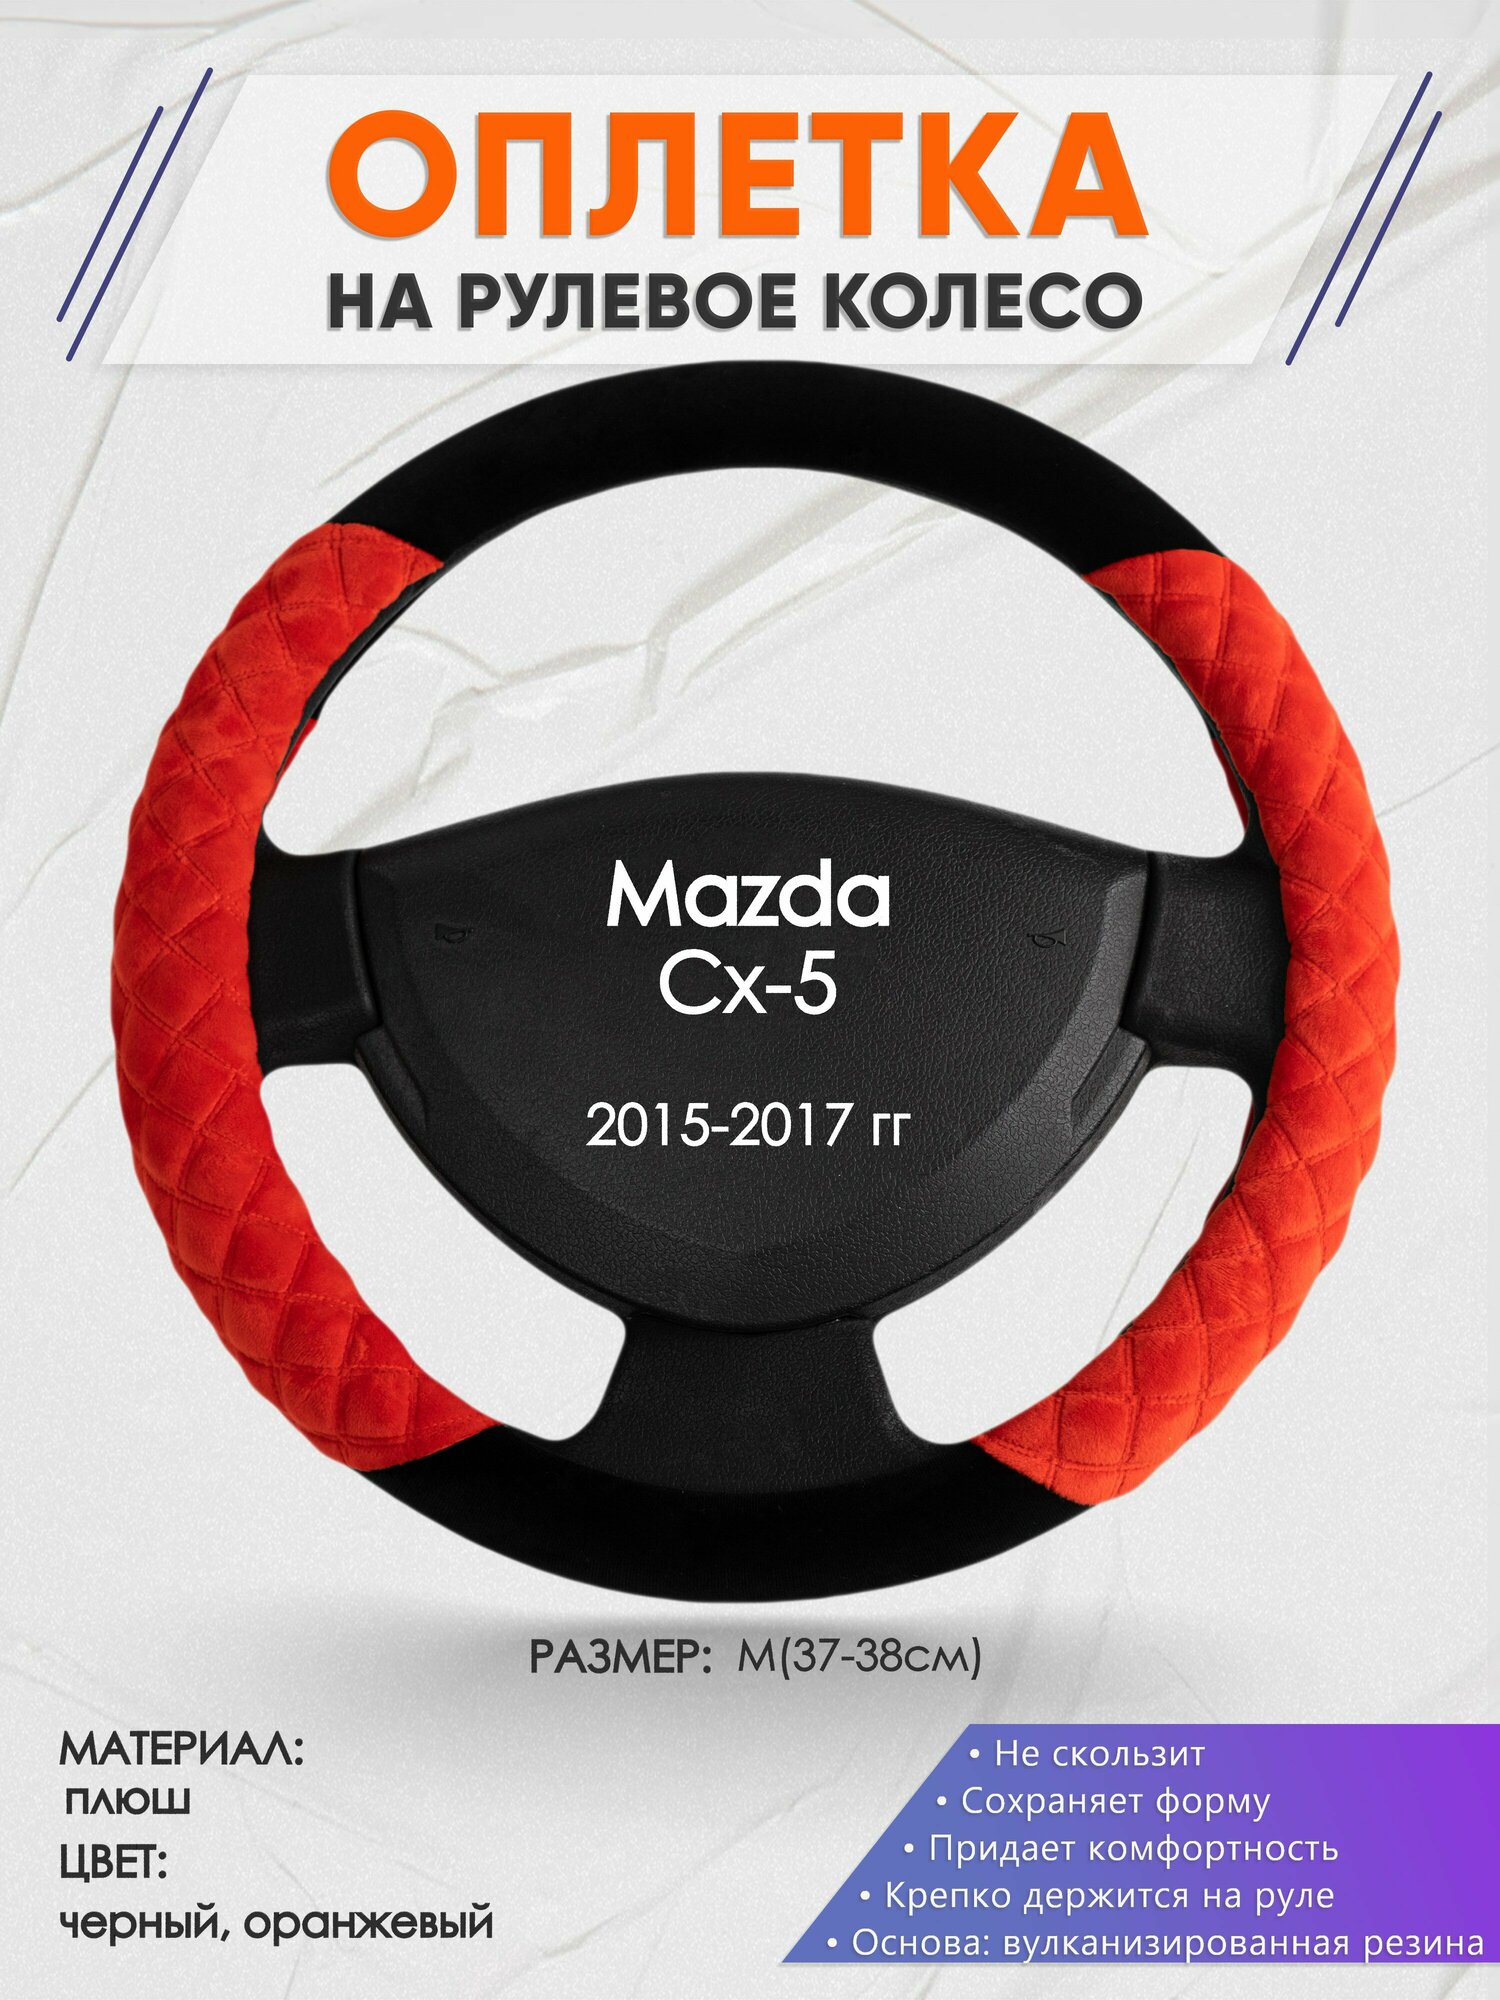 Оплетка на руль для Mazda Cx-5 (Мазда сх 5 ) 2015-2017, M(37-38см), Замша 37